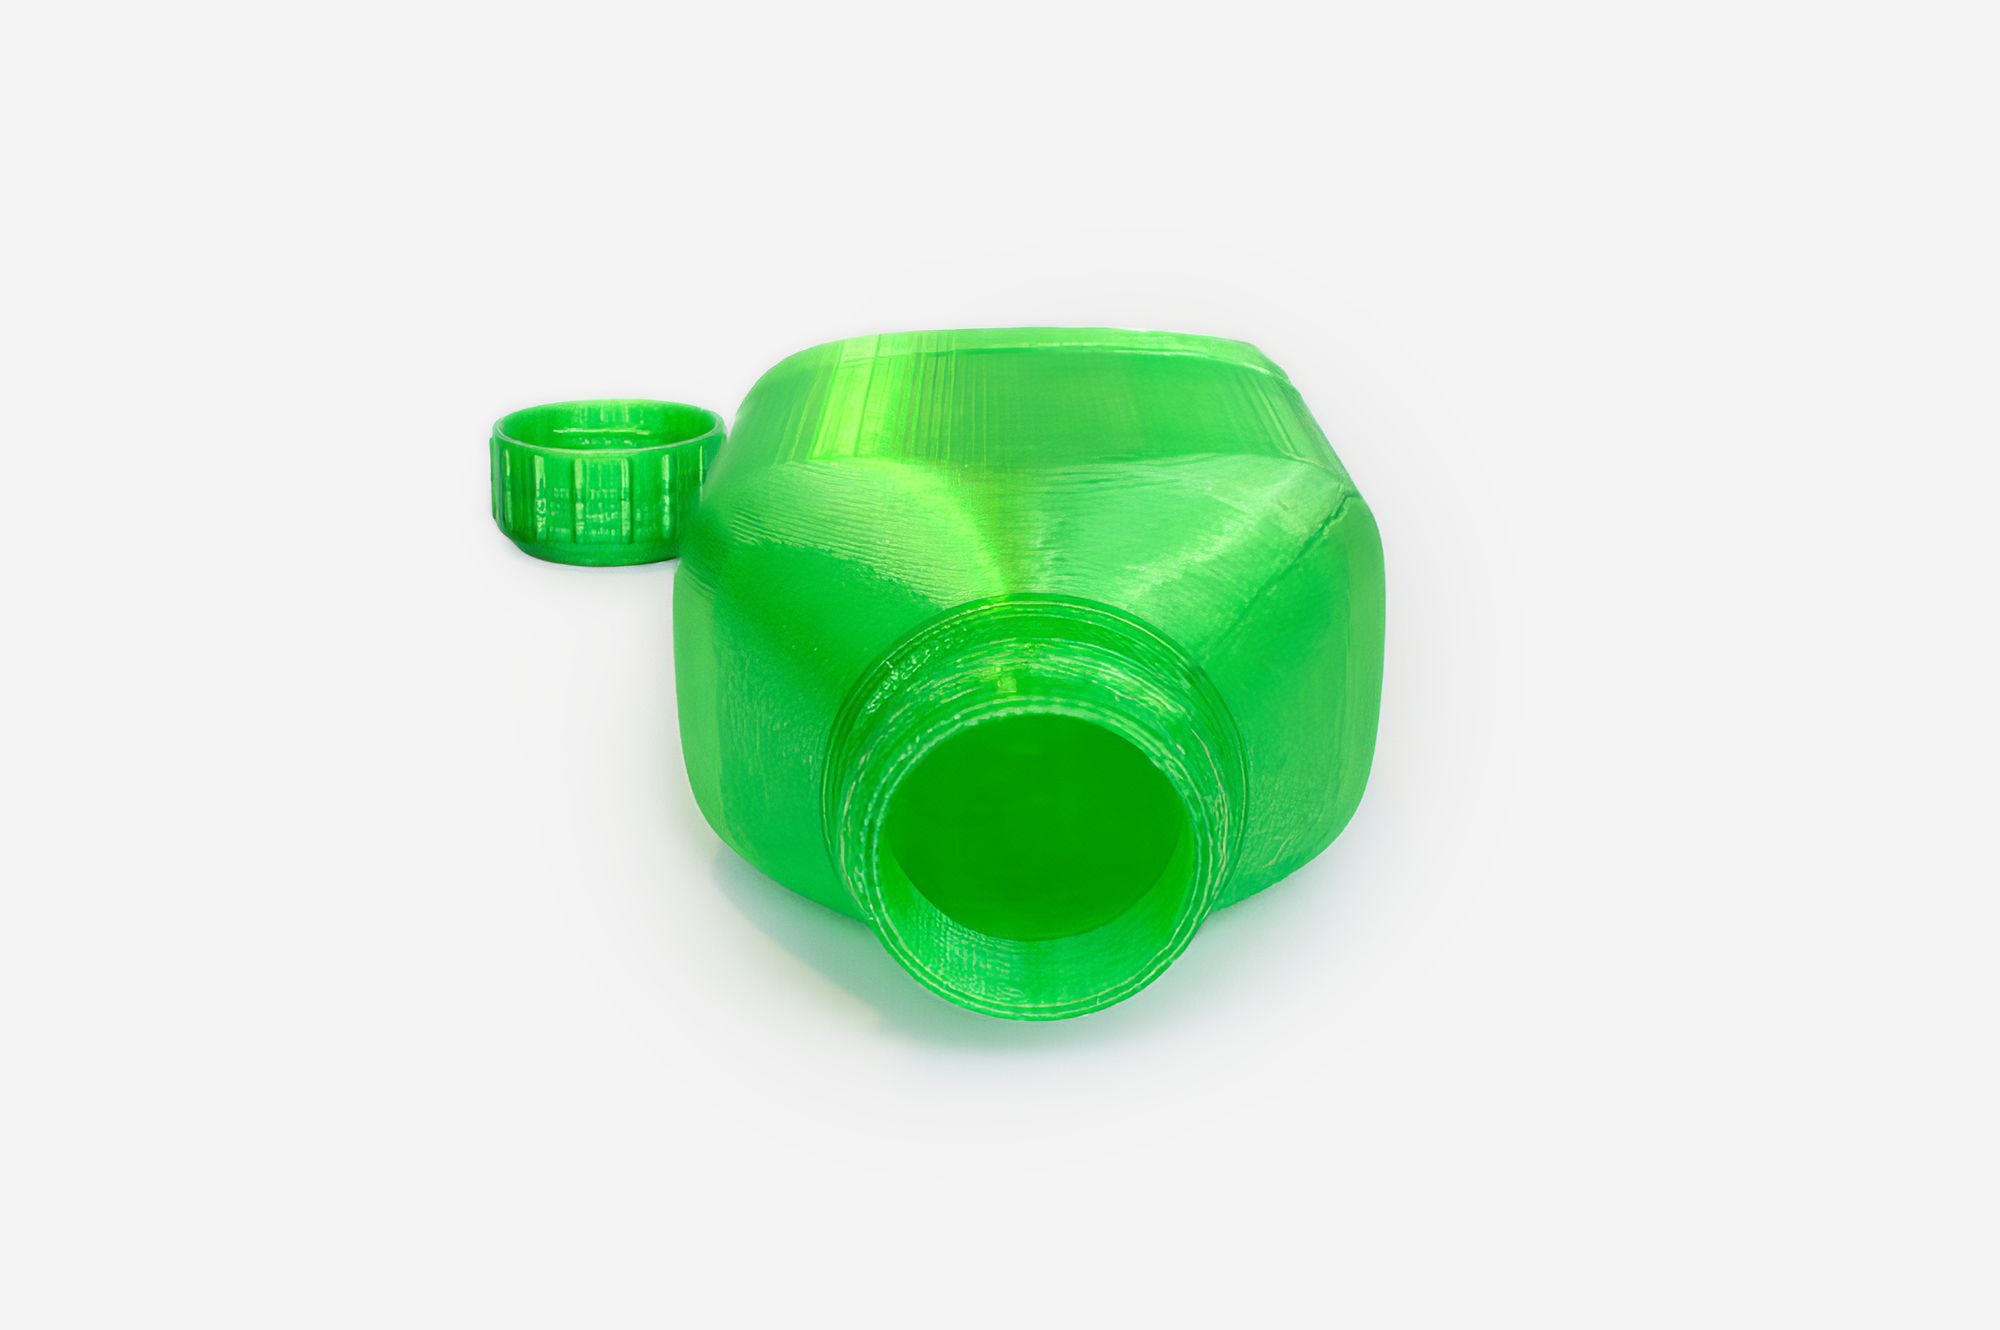 3d printed PETG filament model of a bottle